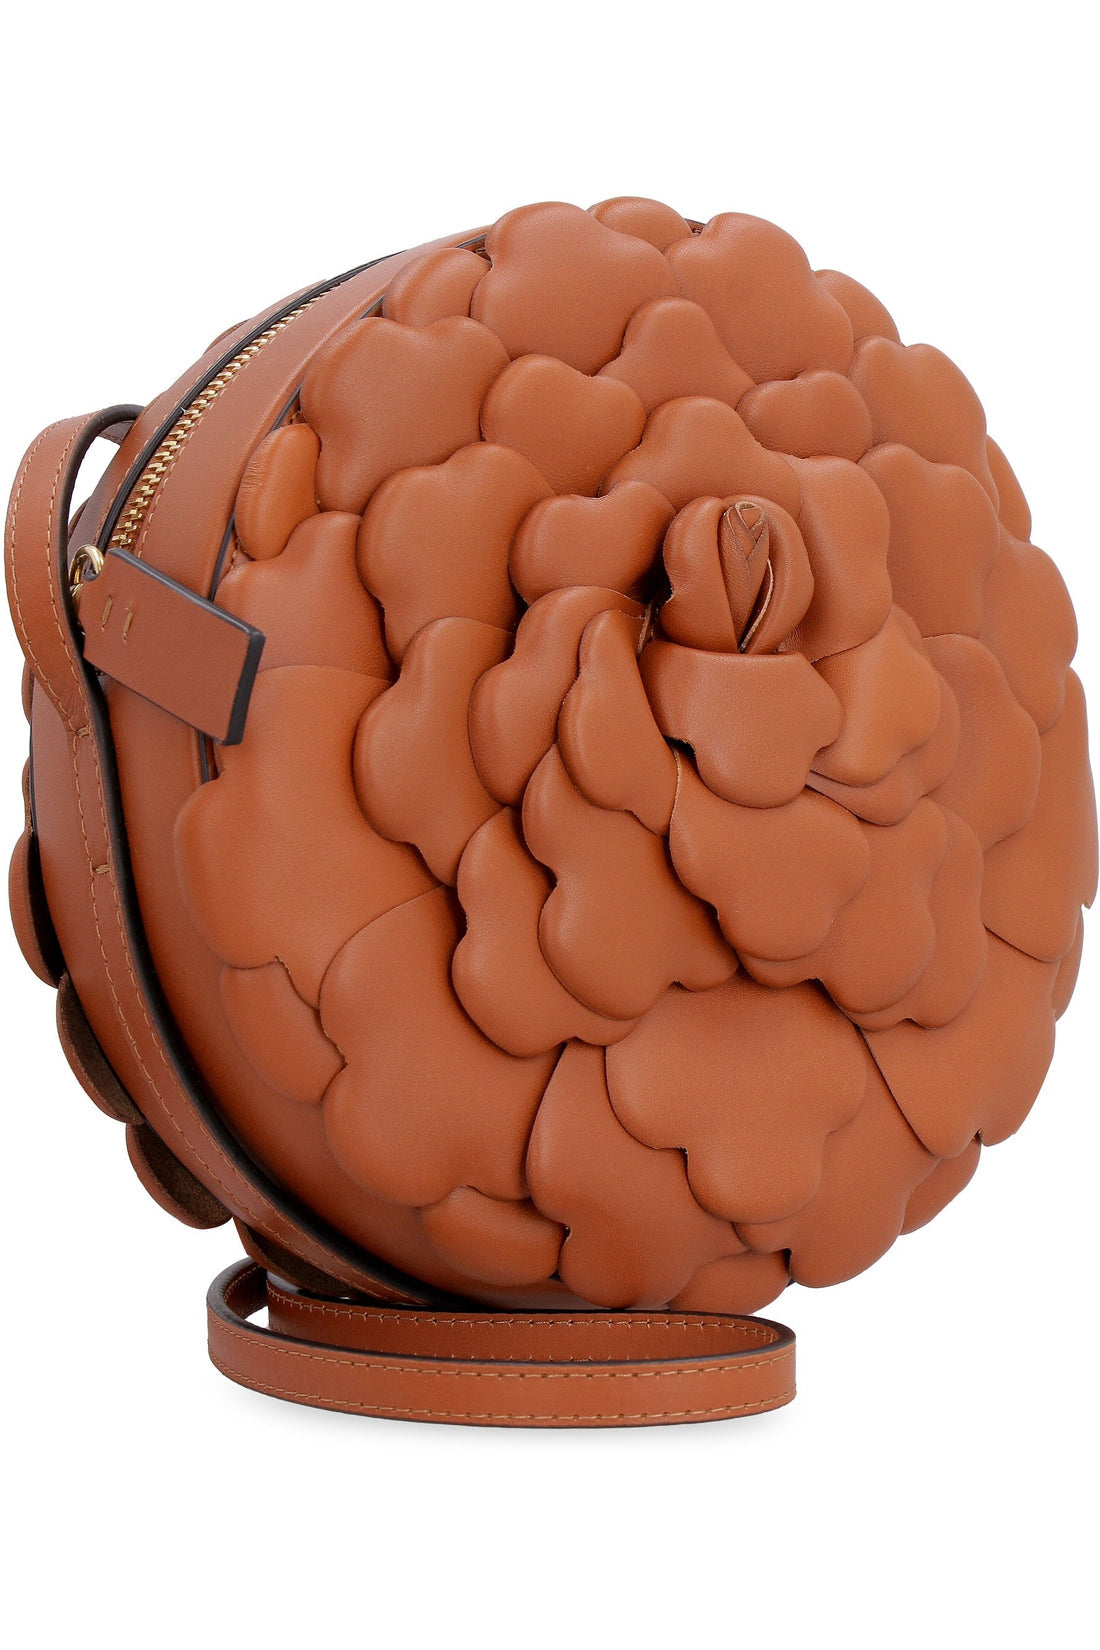 Valentino-OUTLET-SALE-Valentino Garavani - Atelier Rose Edition leather crossbody bag-ARCHIVIST